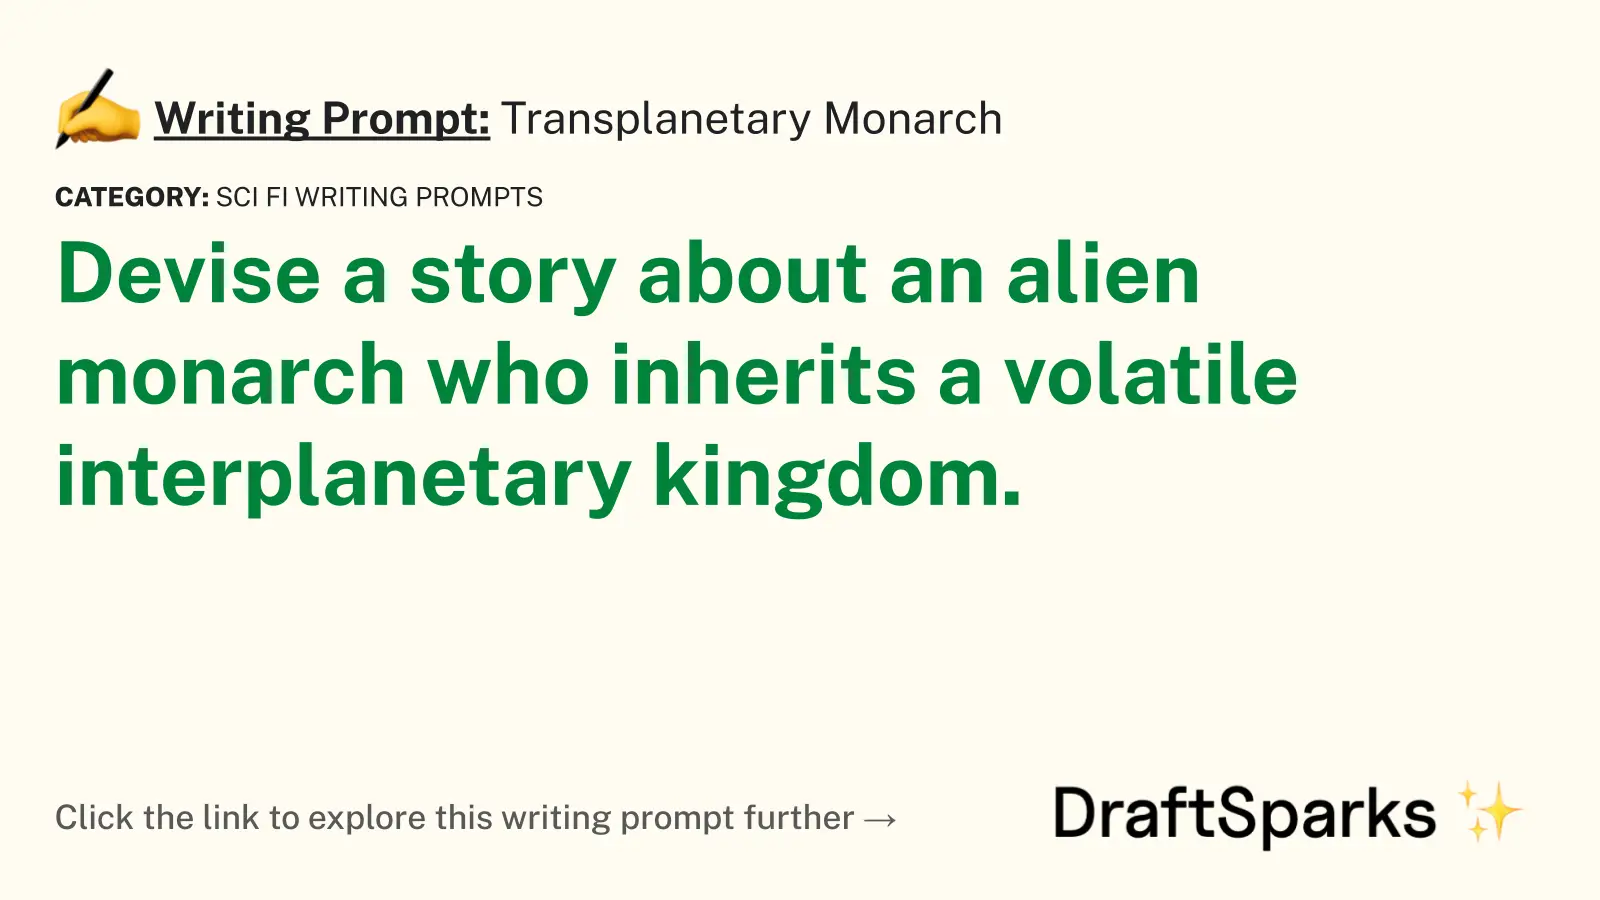 Transplanetary Monarch